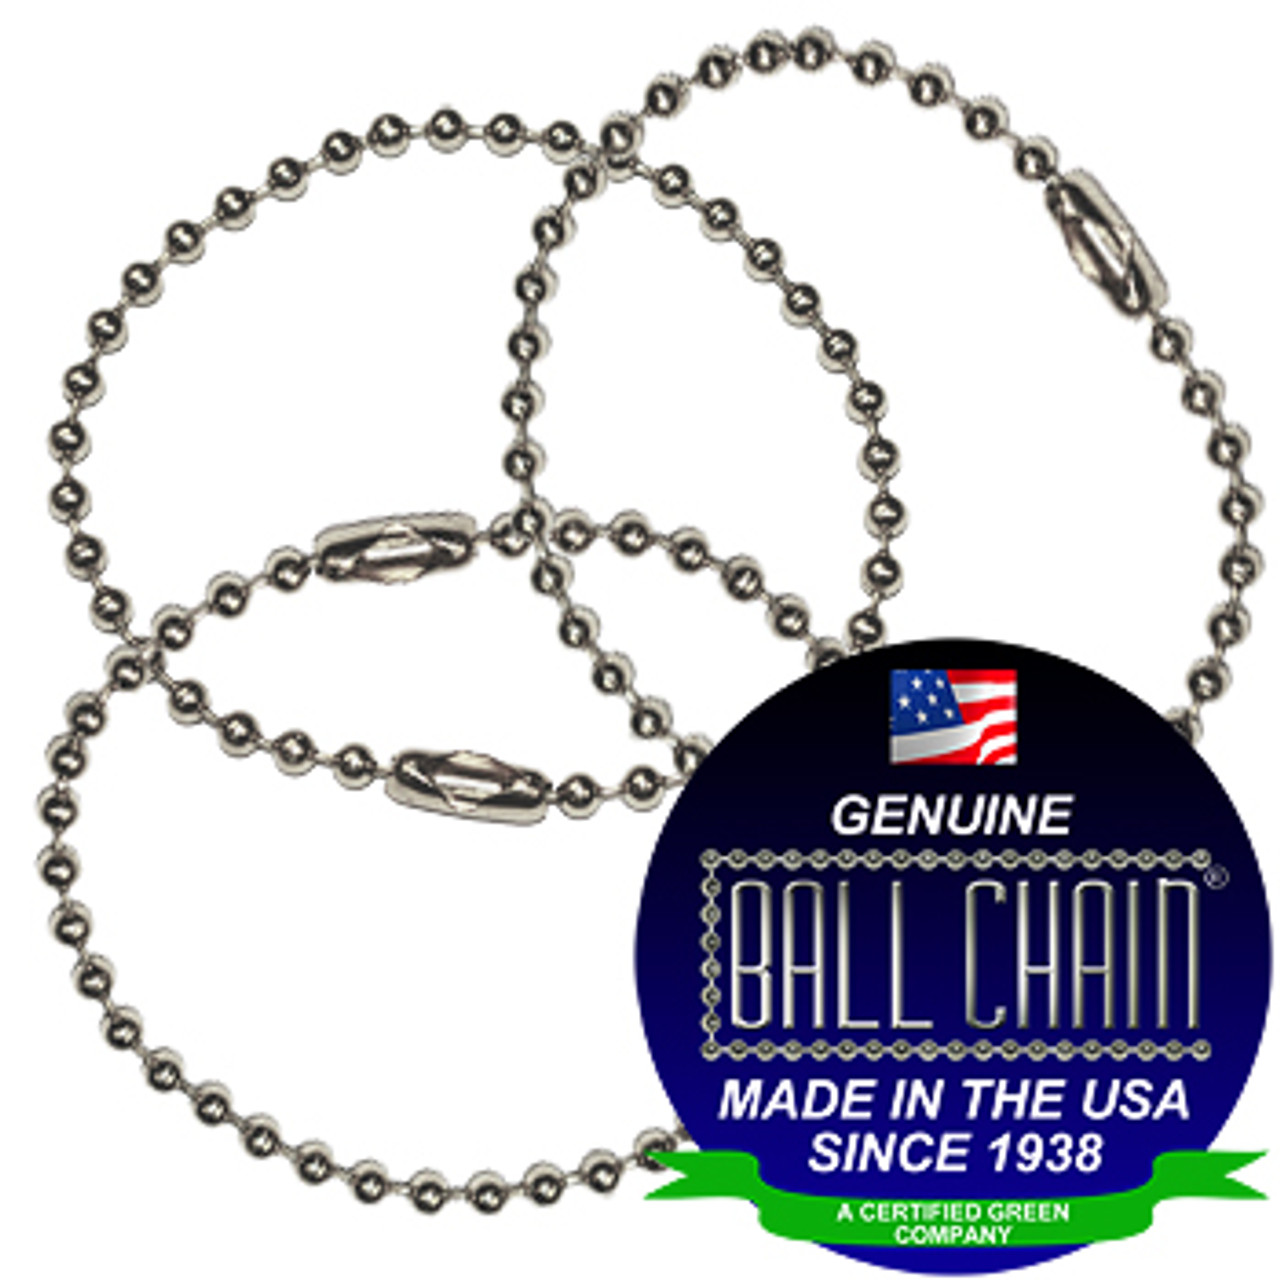 #3 Aluminum Key Chains - 4 Inch Length